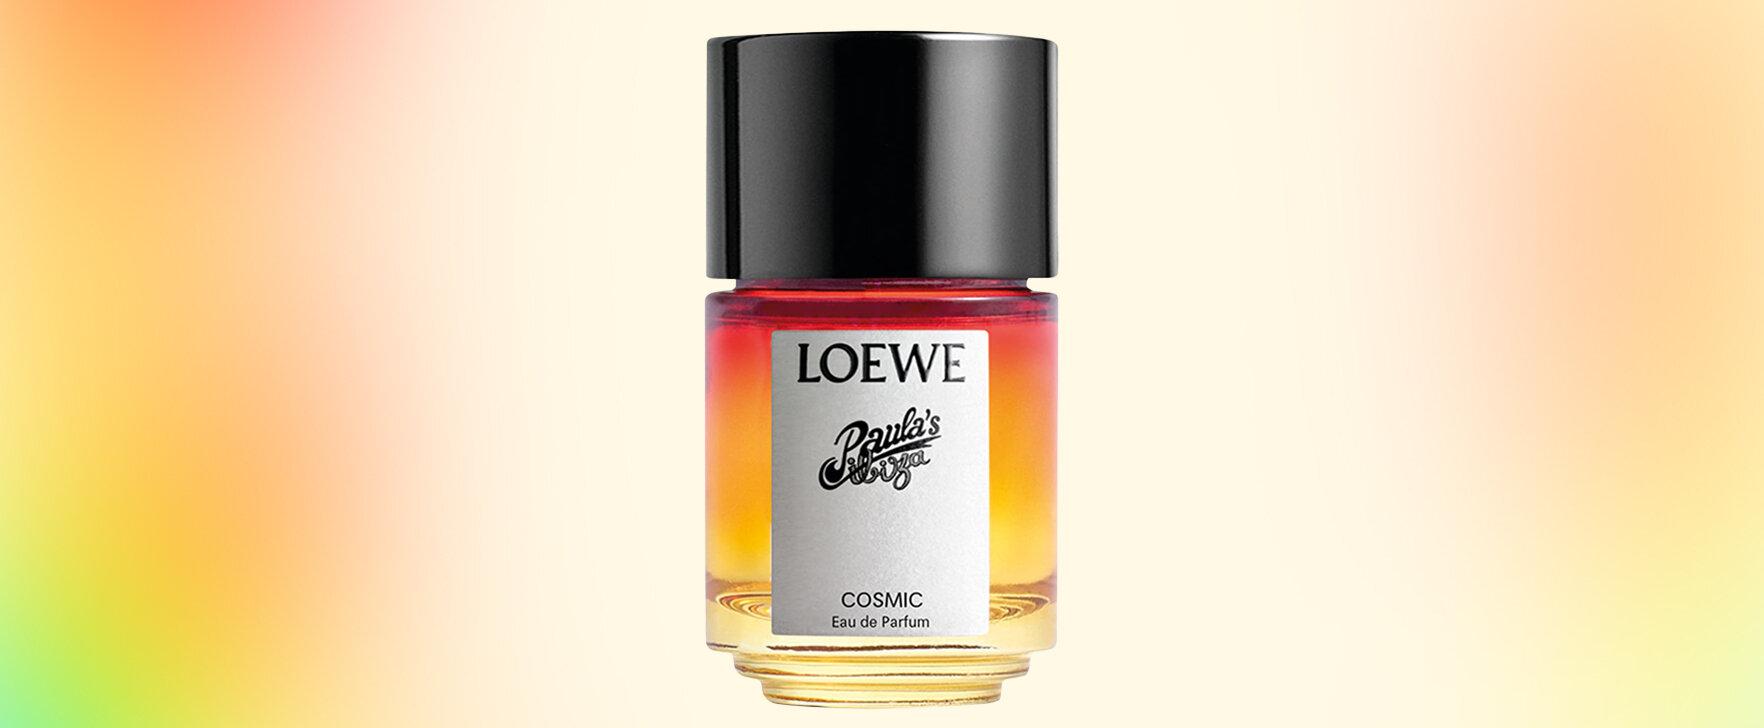 Cosmic Inspiration: The New Eau de Parfum Paula's Ibiza Cosmic by Loewe